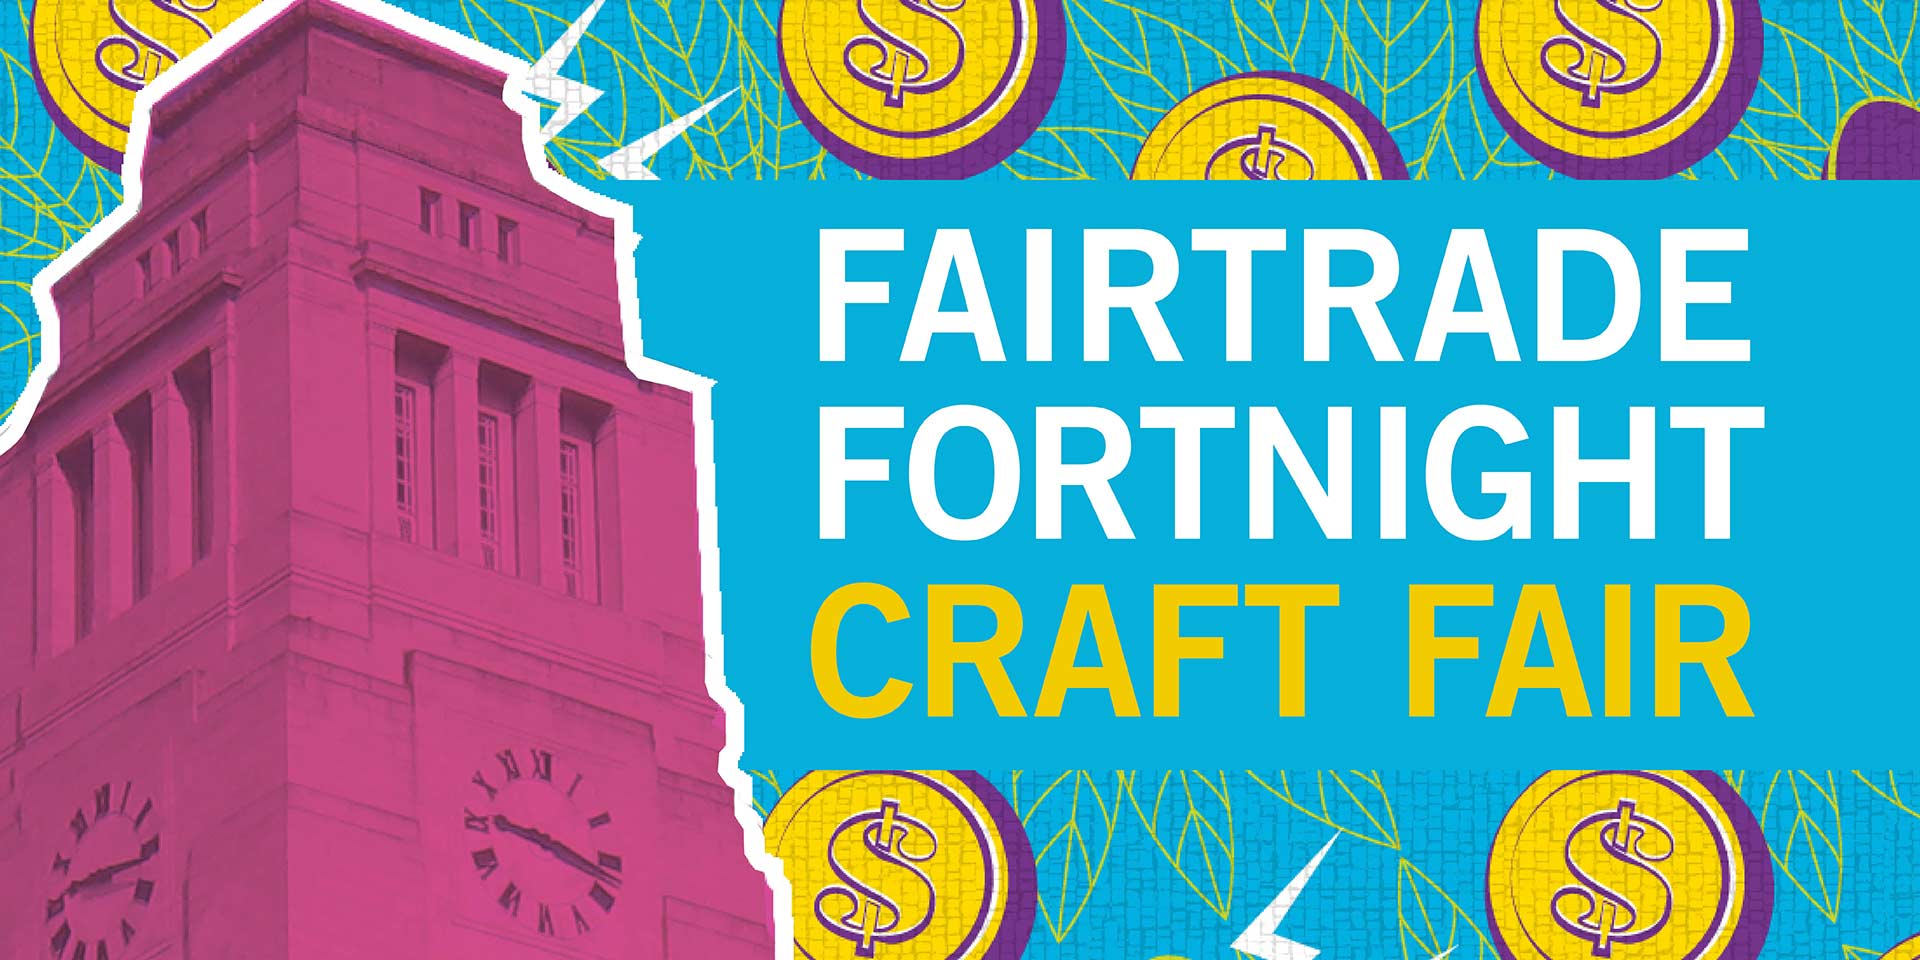 Fairtrade Fortnight Fair 2019